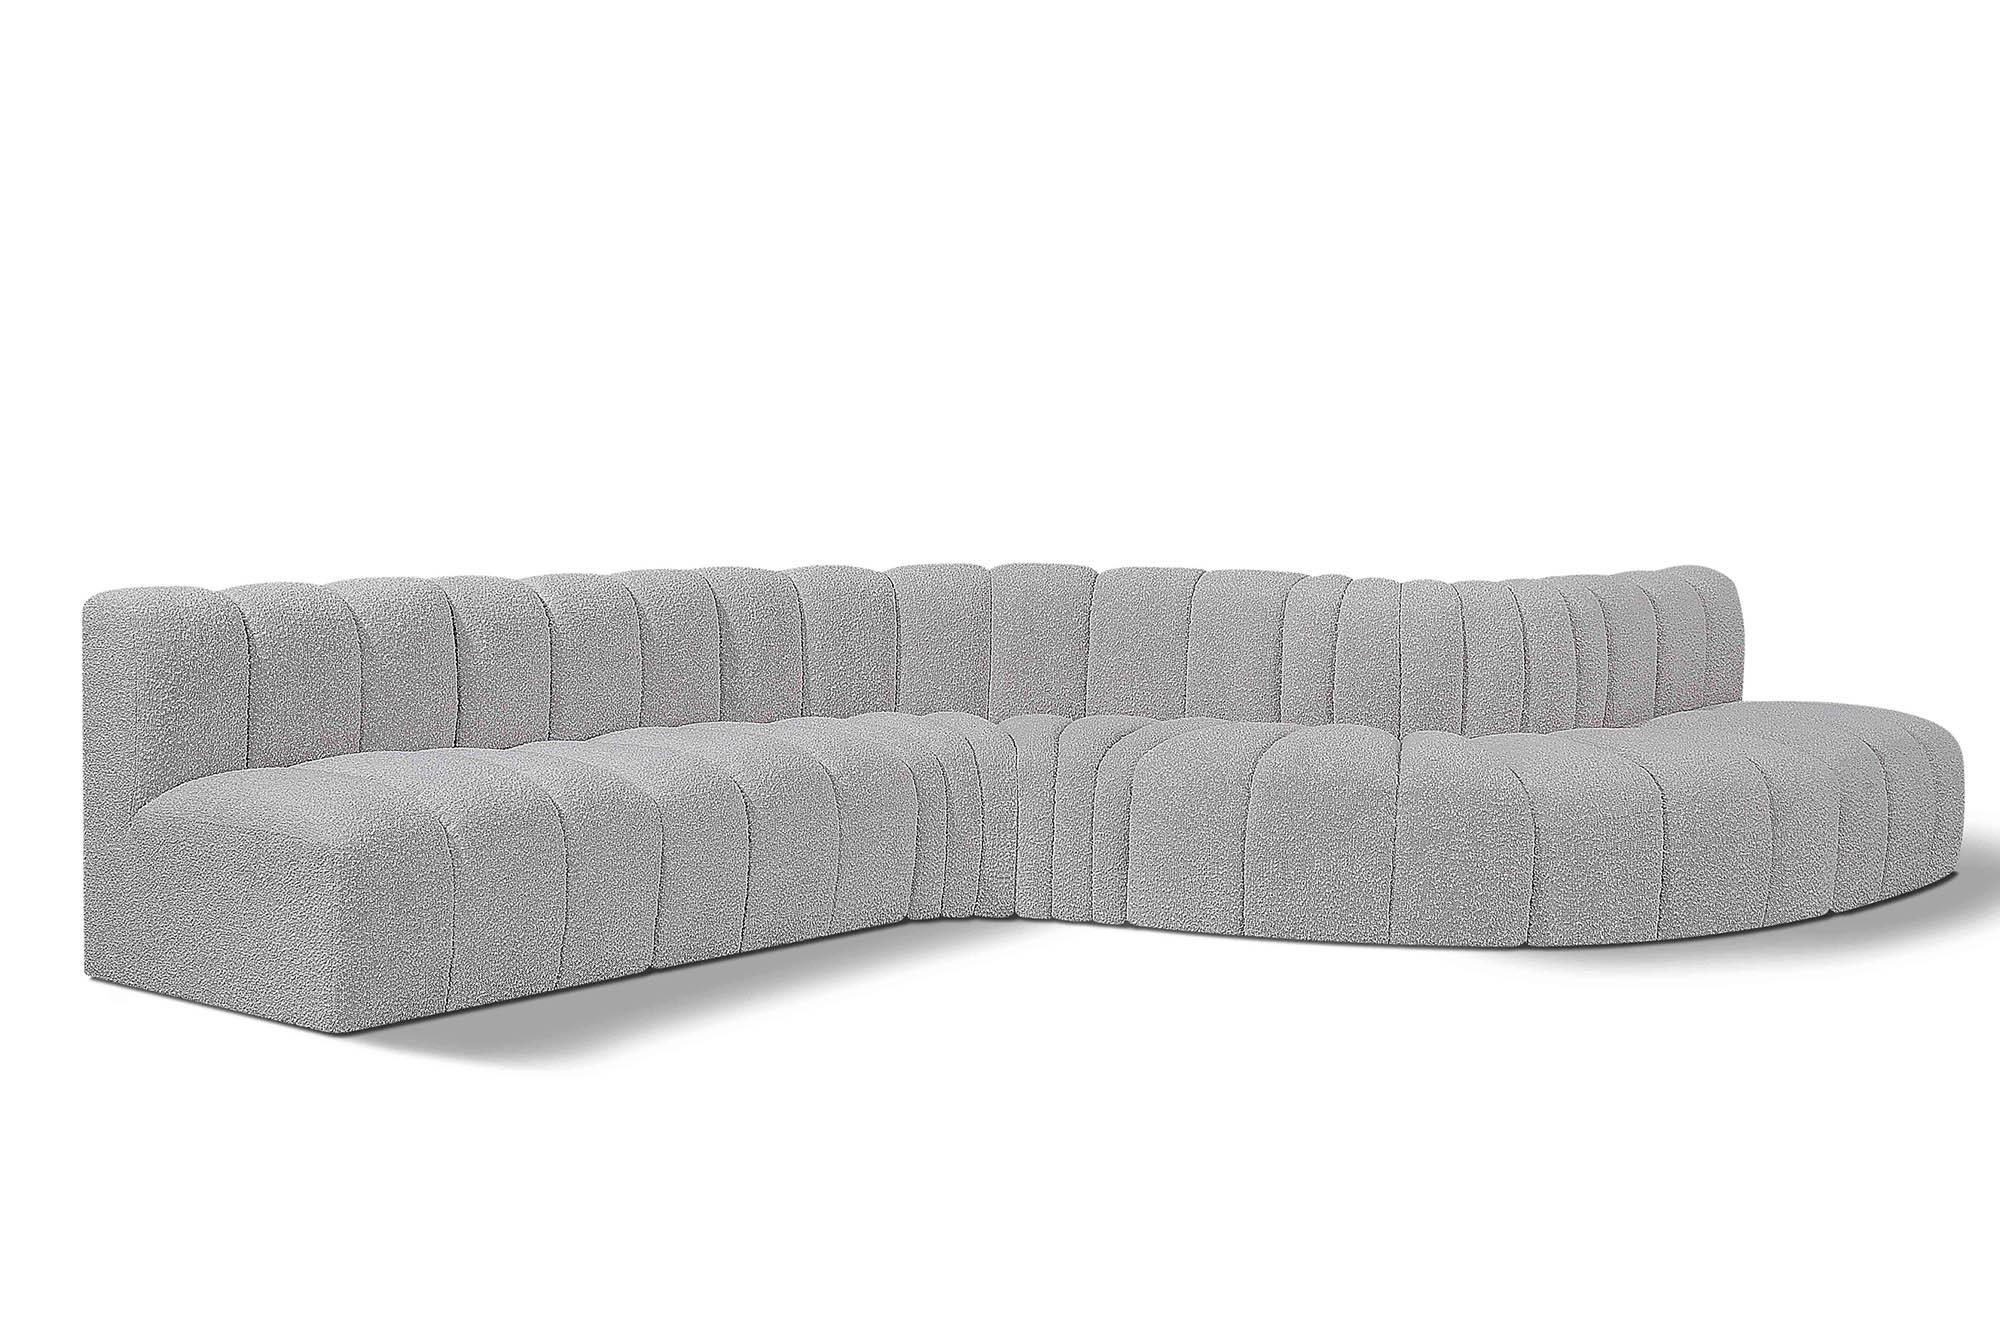 Contemporary, Modern Modular Sectional Sofa ARC 102Grey-S7C 102Grey-S7C in Gray 